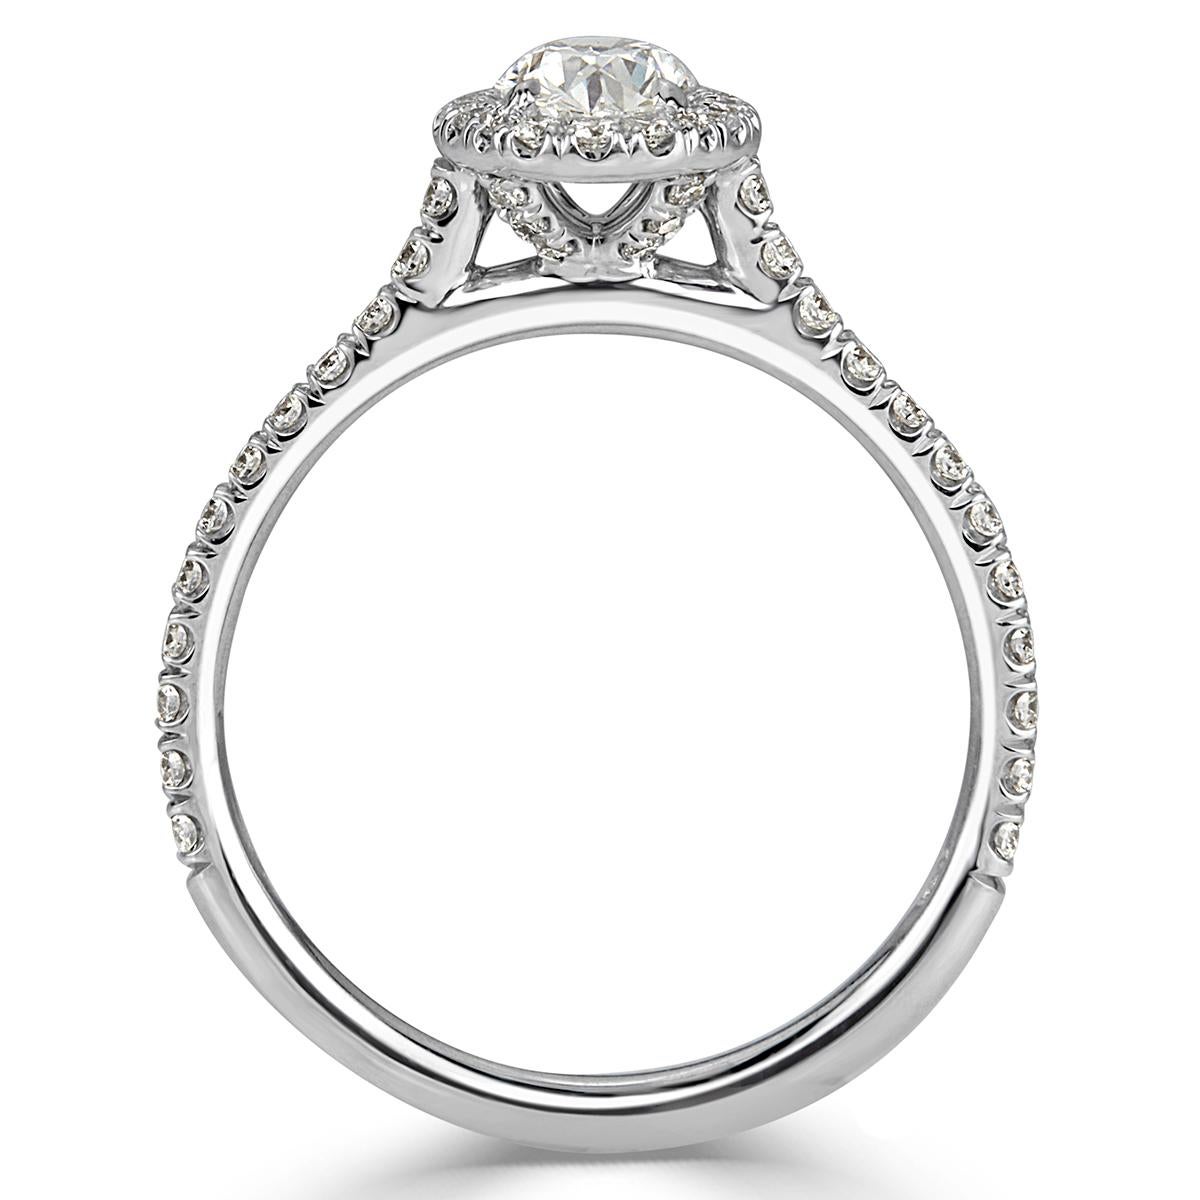 Women's or Men's Mark Broumand 1.00 Carat Oval Cut Diamond Engagement Ring